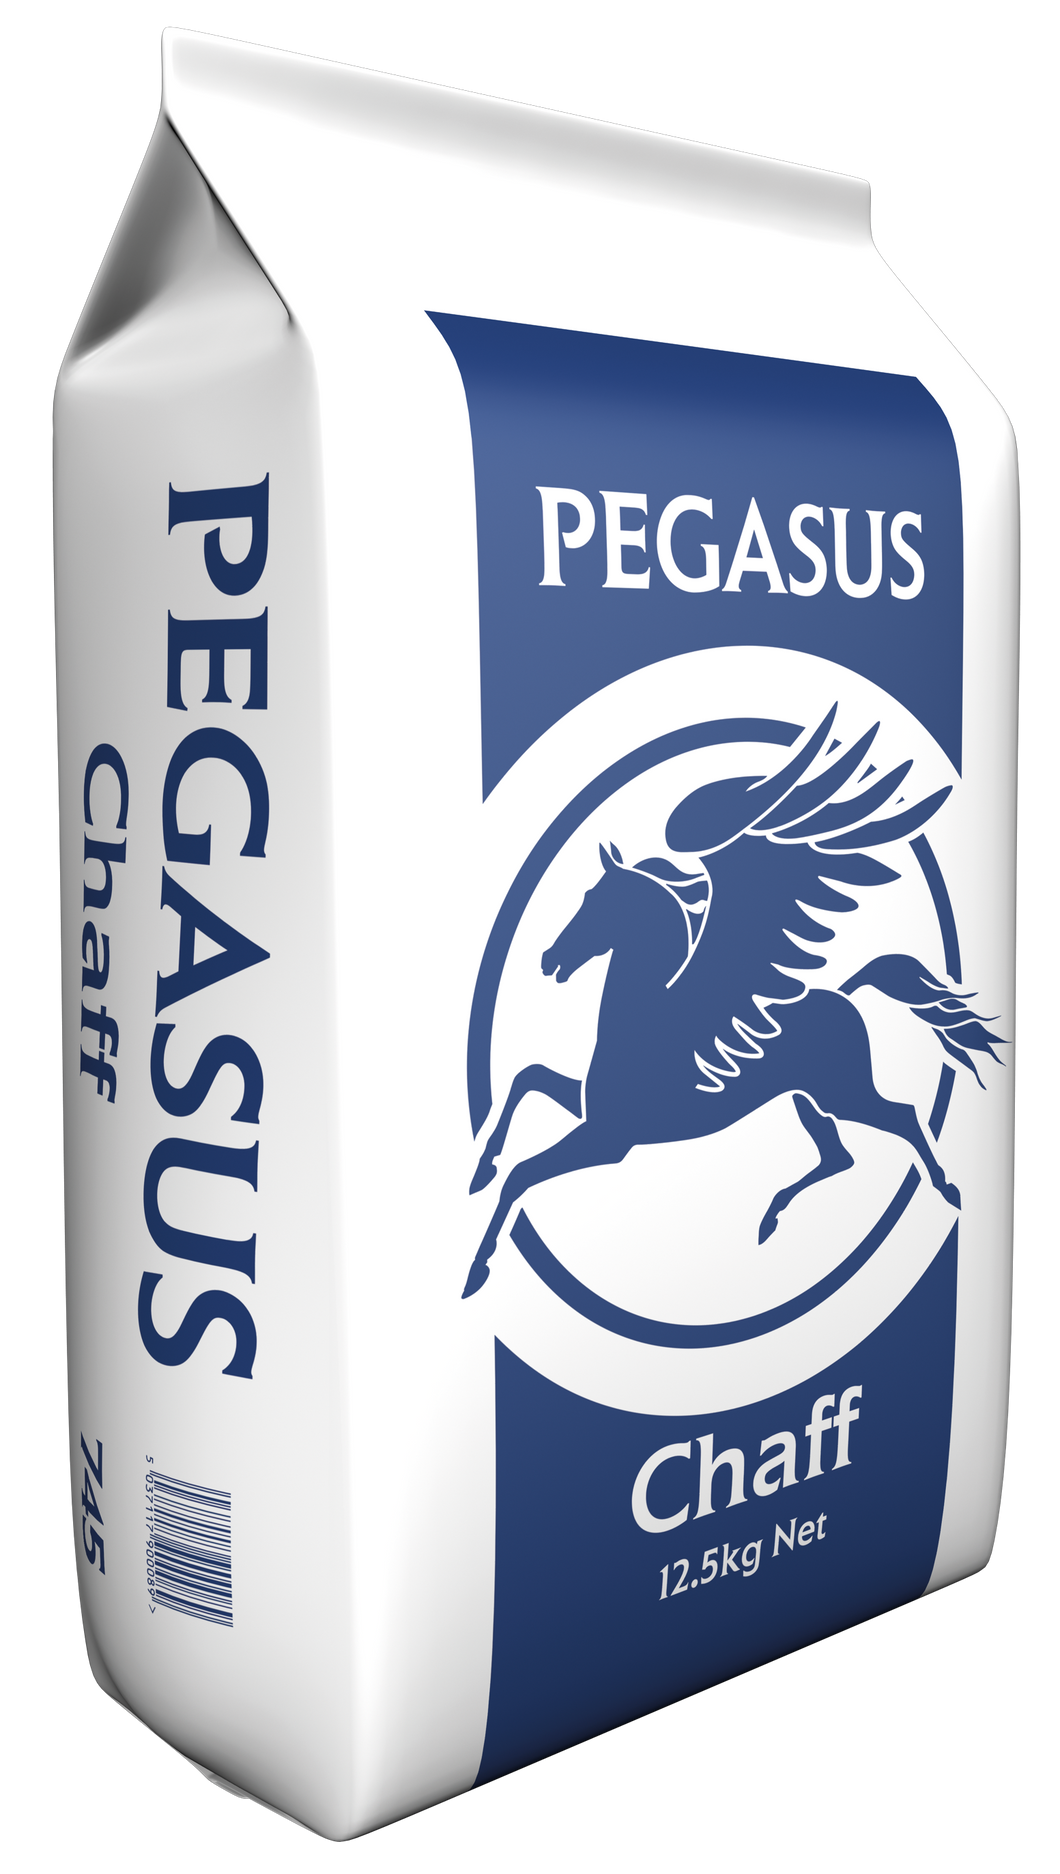 Spillers Pegasus Chaff 20kg